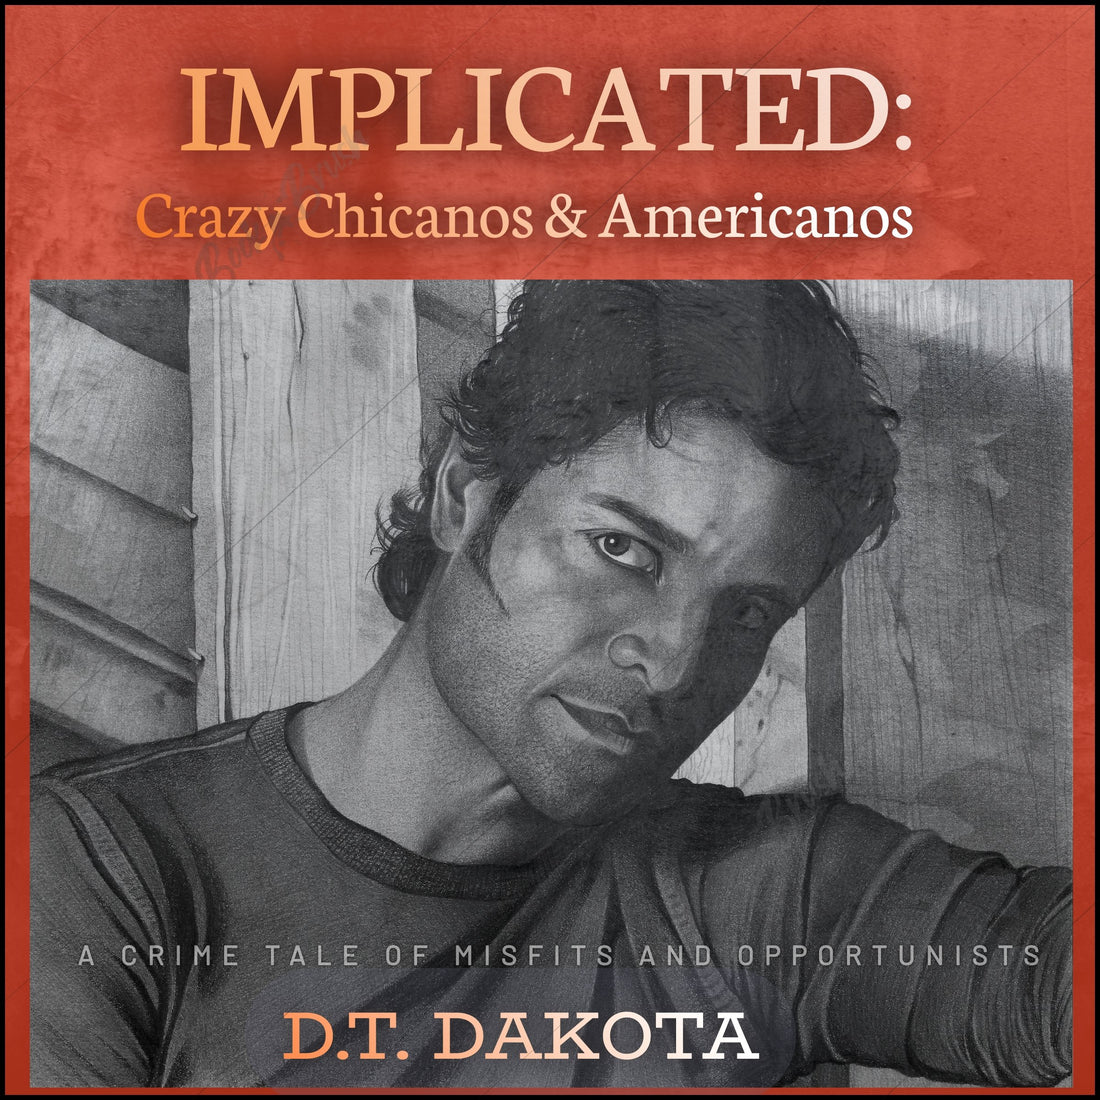 Hot, New Bone-Chilling Crime Fiction Novel "Implicated: Crazy Chicanos and Americanos" by D.T. Dakota